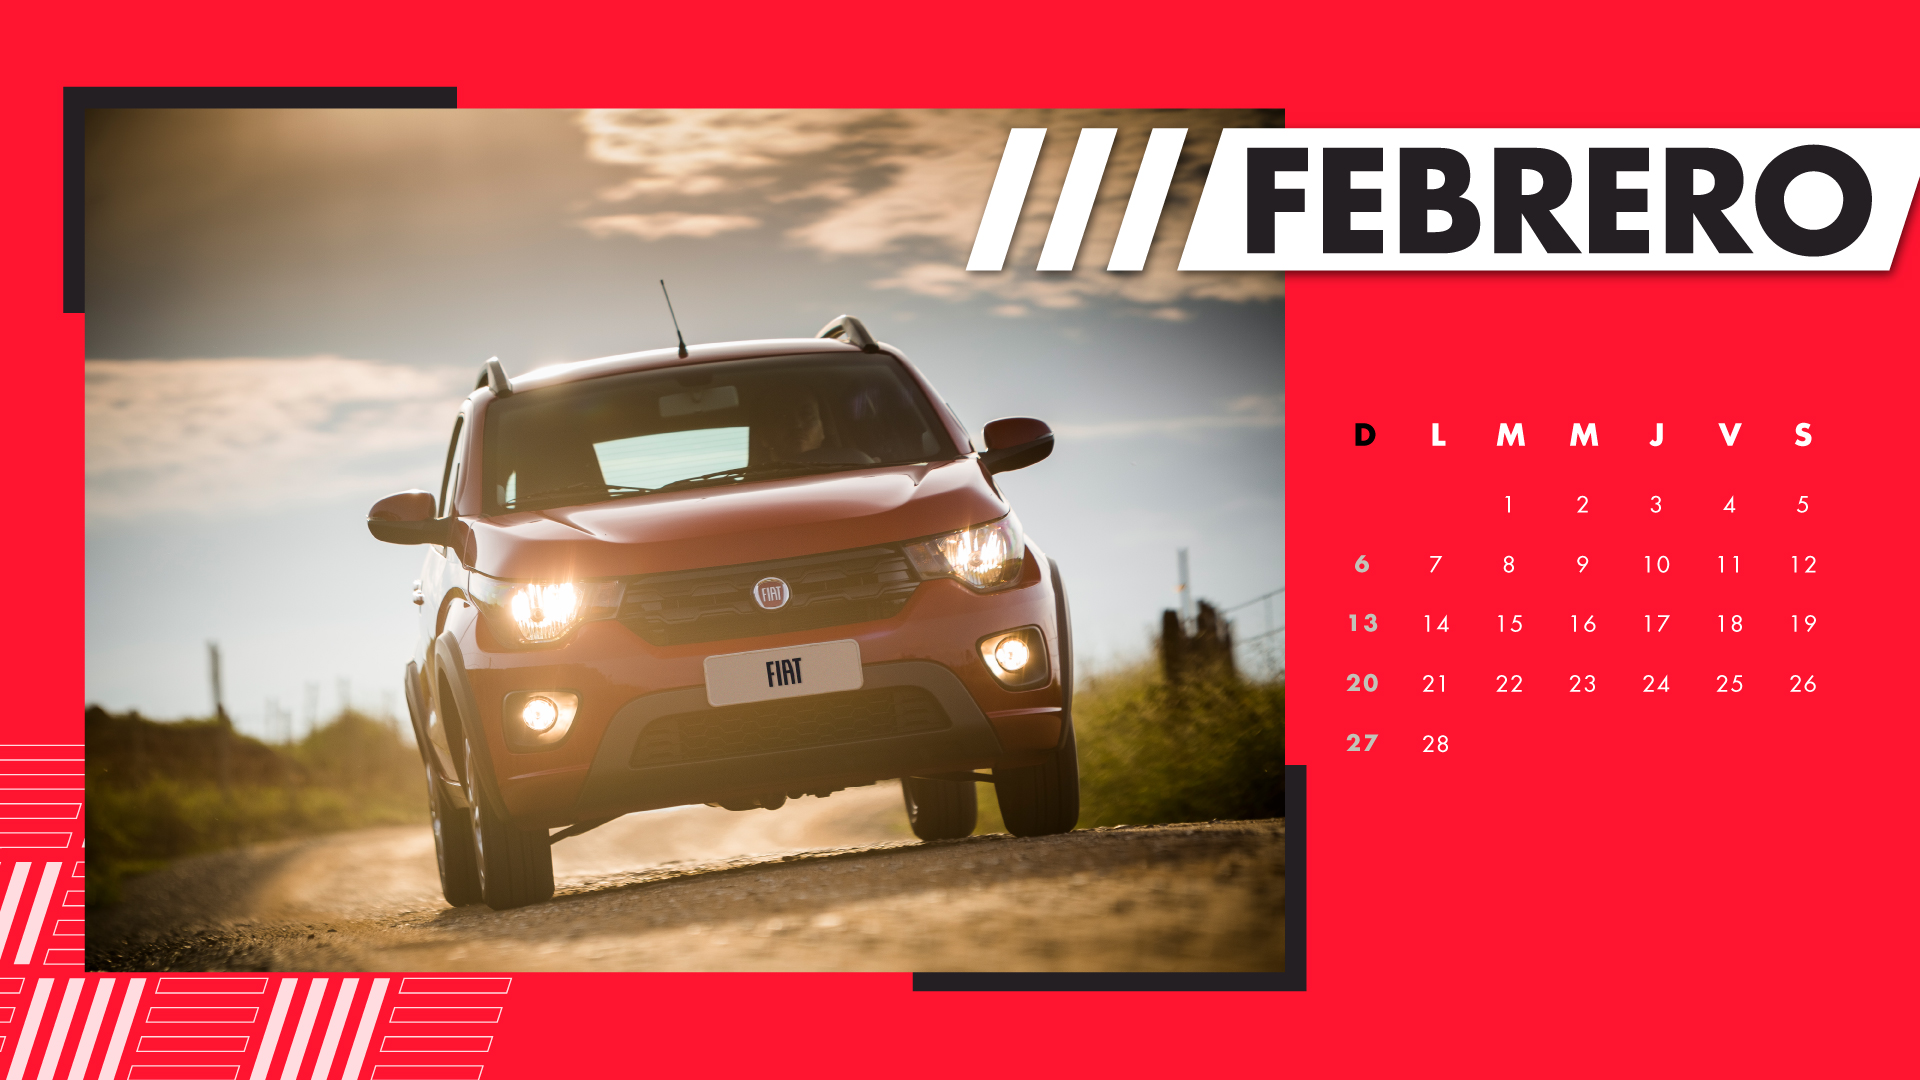 Carro Fiat color rojo, calendario Febrero 2022